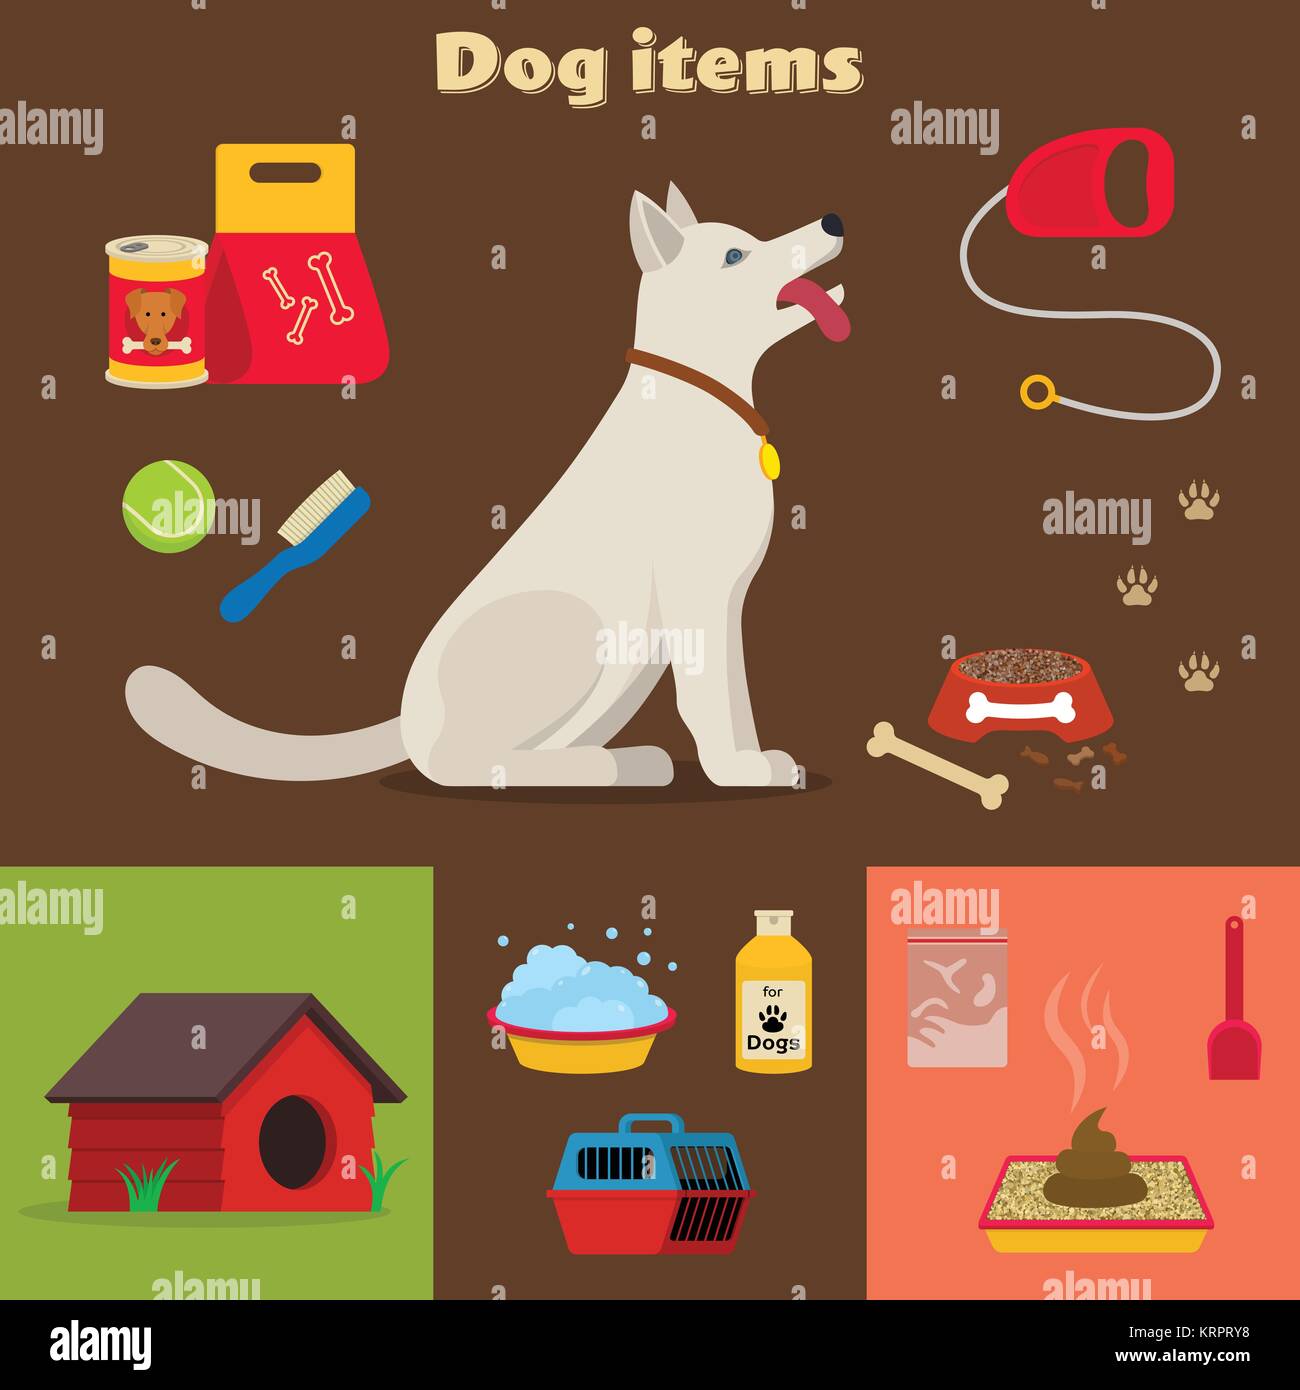 Dog care object set, items and stuff, vector cartoon illustration, food stuff bone kennel collar clothing medicines Stock Vector